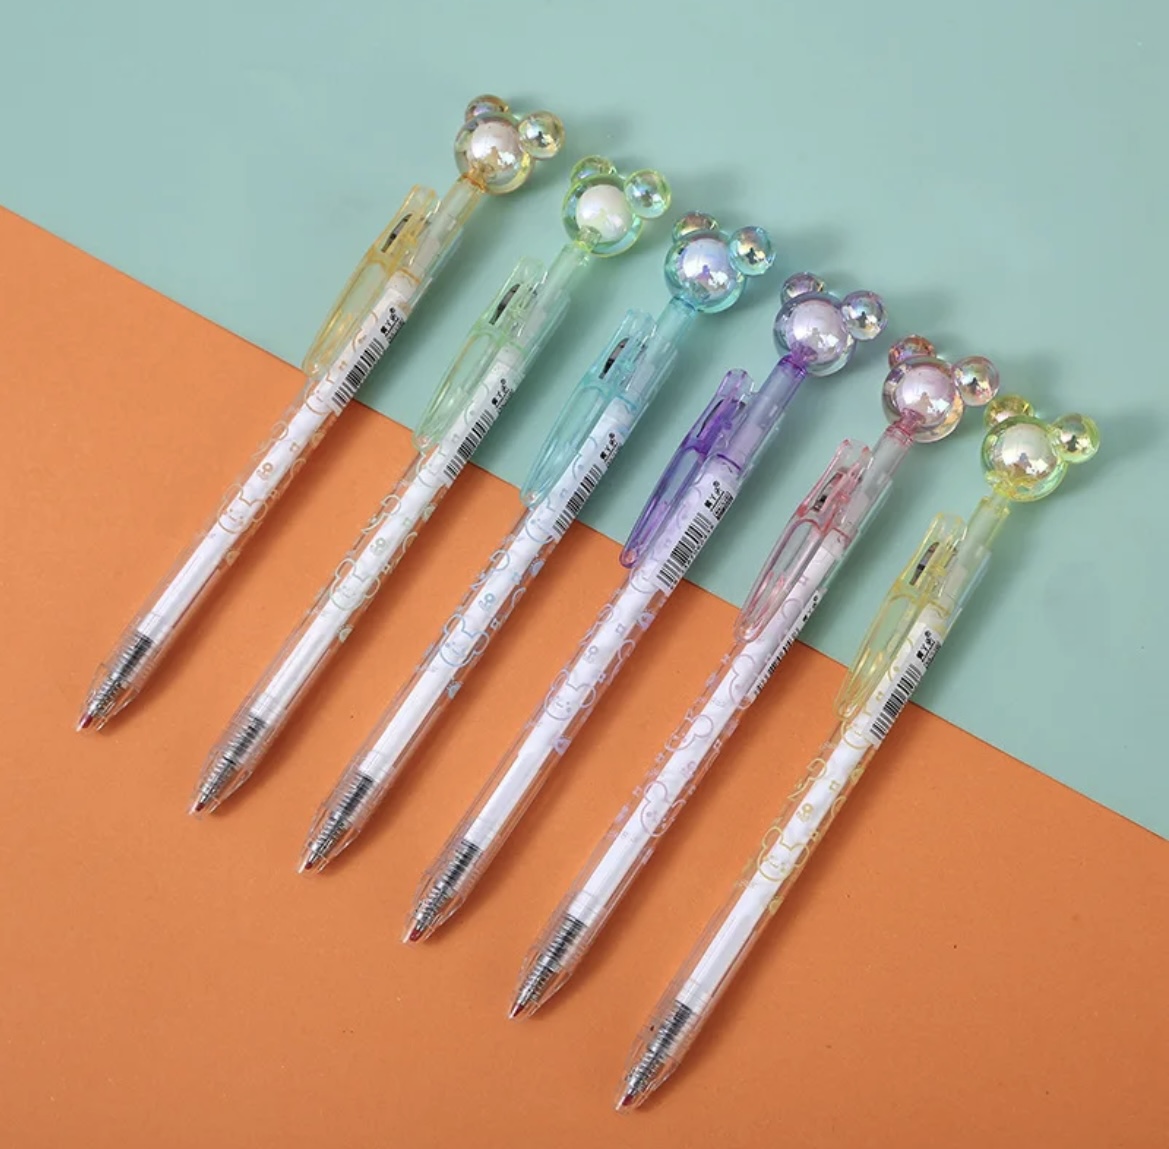 Imagen de bolígrafos con cabeza de mickey mouse de cristal en morado, verde, amarillo, rosa, azul y naranja